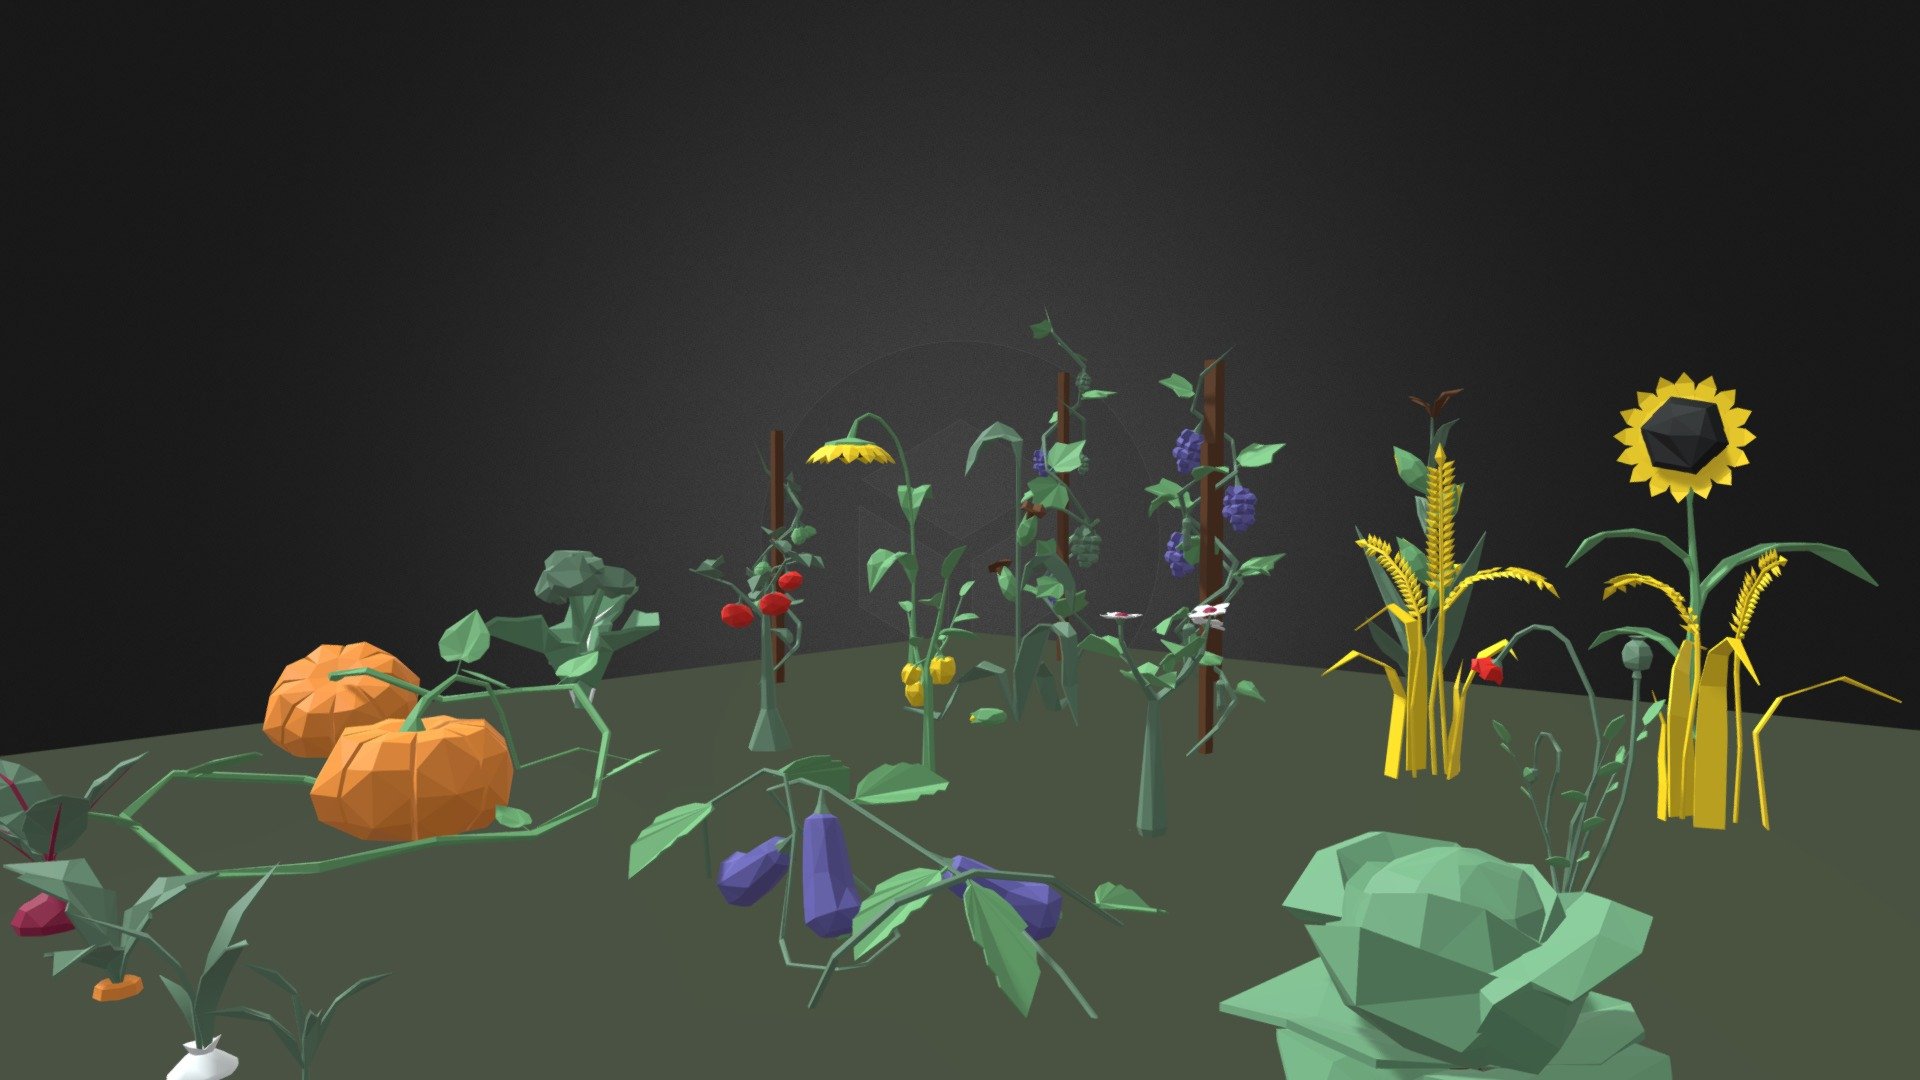 Farming Crops 3D Low Poly Pack

Web: https://craftpix.net/freebies/free-farming-crops-3d-low-poly-models/ - Farming Crops 3D Low Poly Pack - 3D model by craftpix_net 3d model